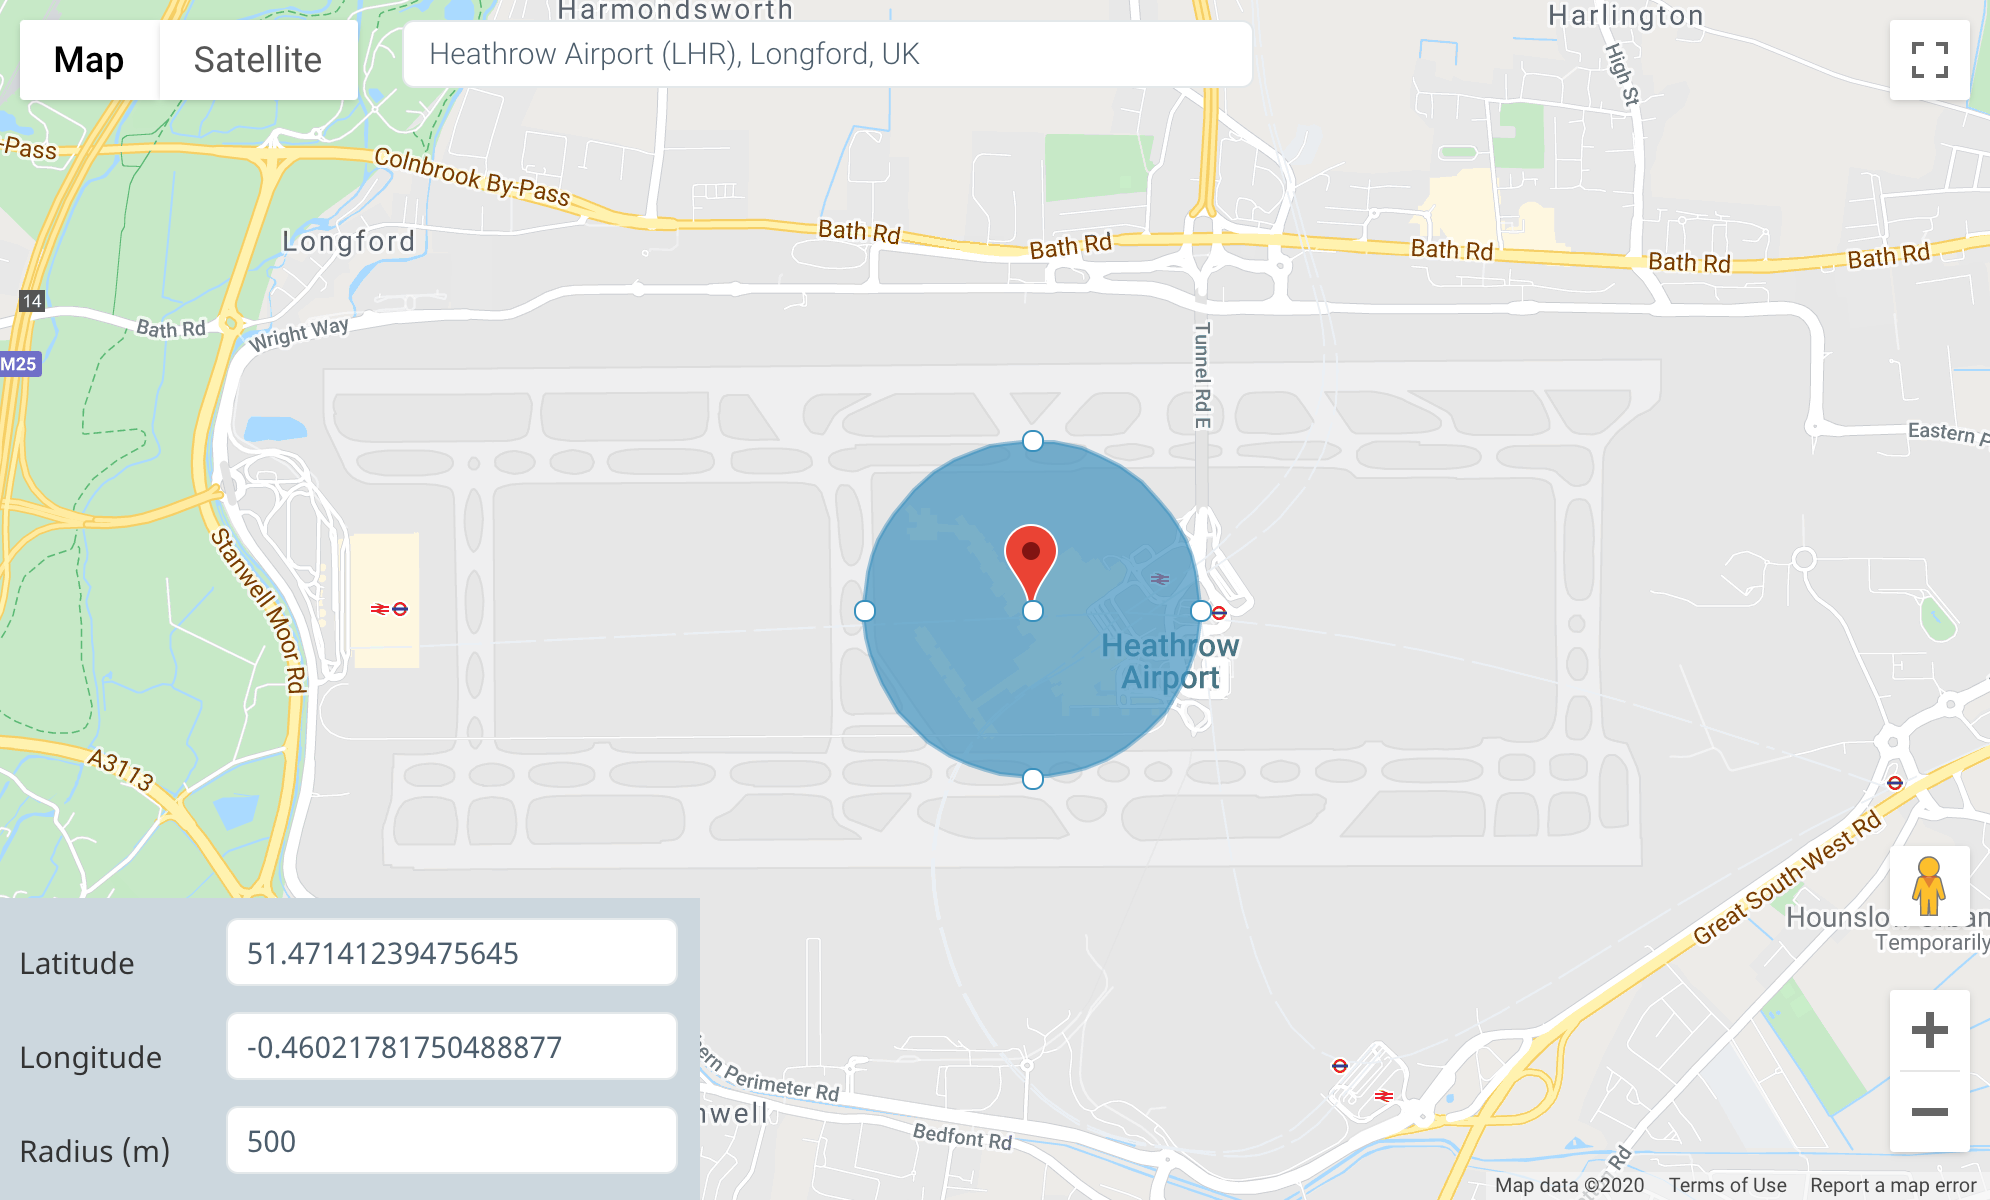 Circular geoplace at Heathrow airport